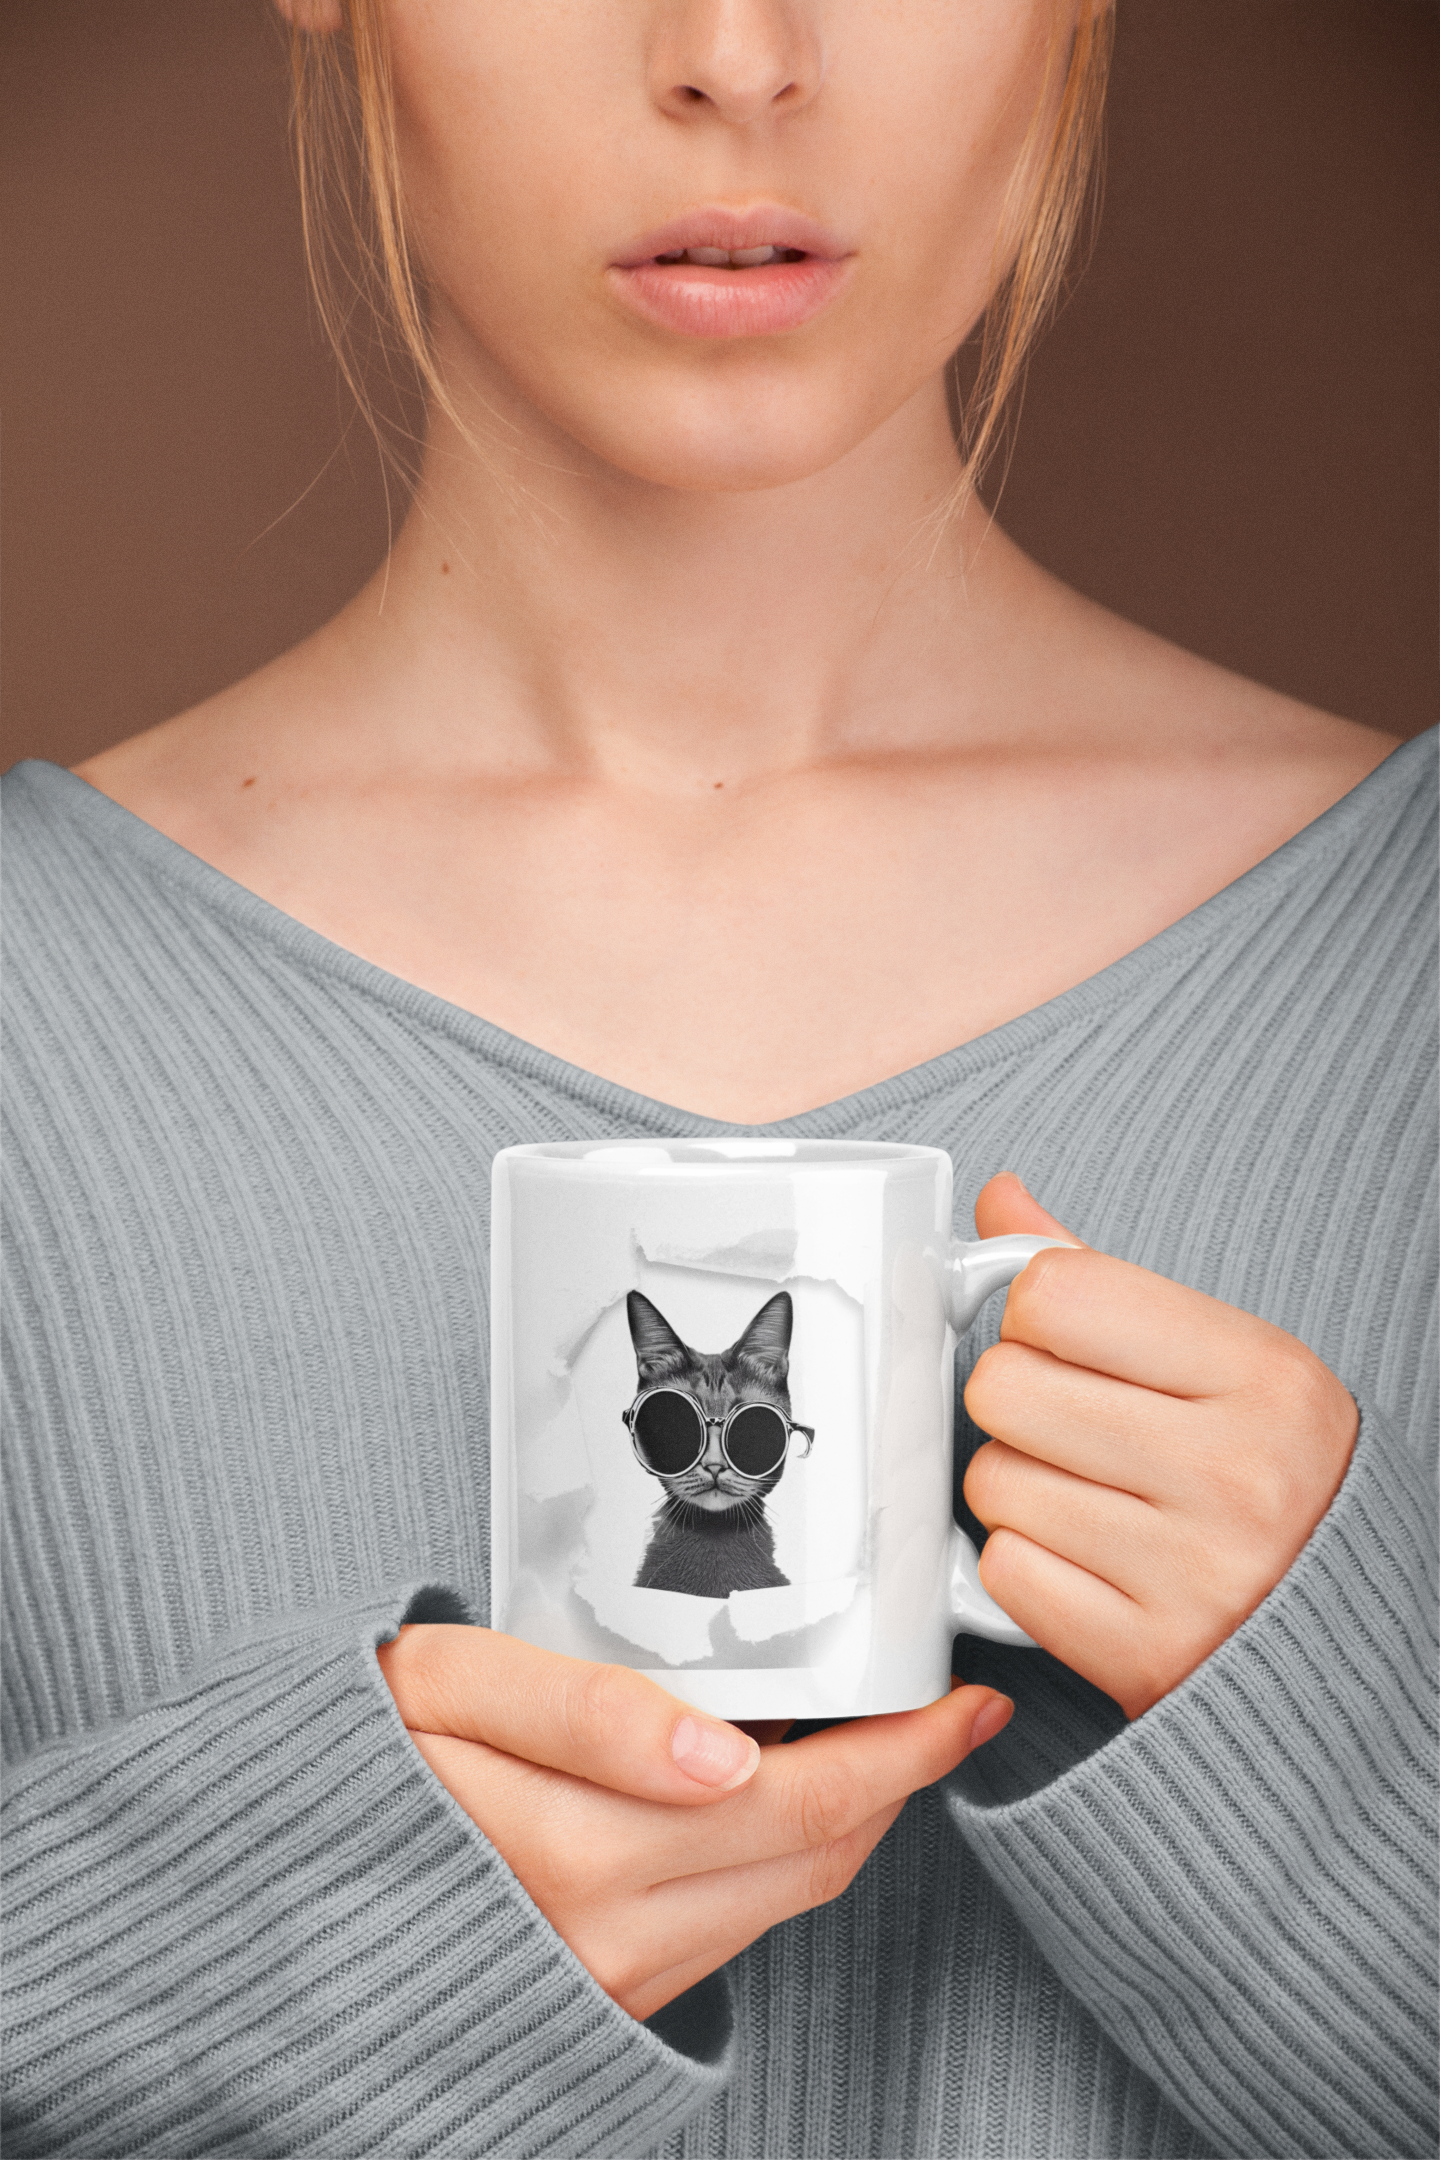 Glossy "Breakout Cat" Mug in White